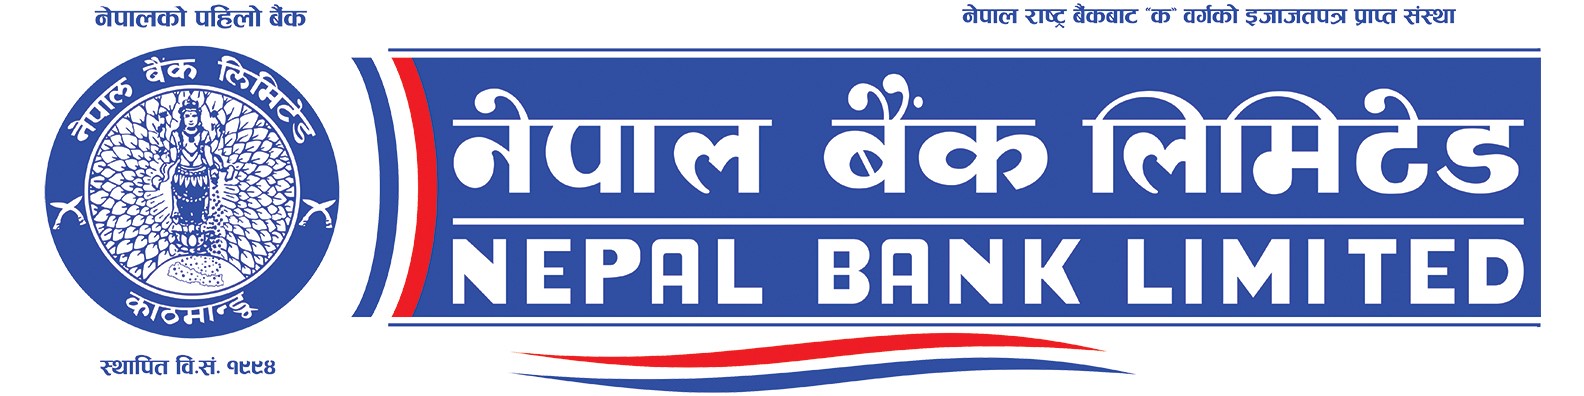 नेपाल बैंकमा नक्कली बैंक ग्यारेन्टी राखेर भ्रष्टाचार